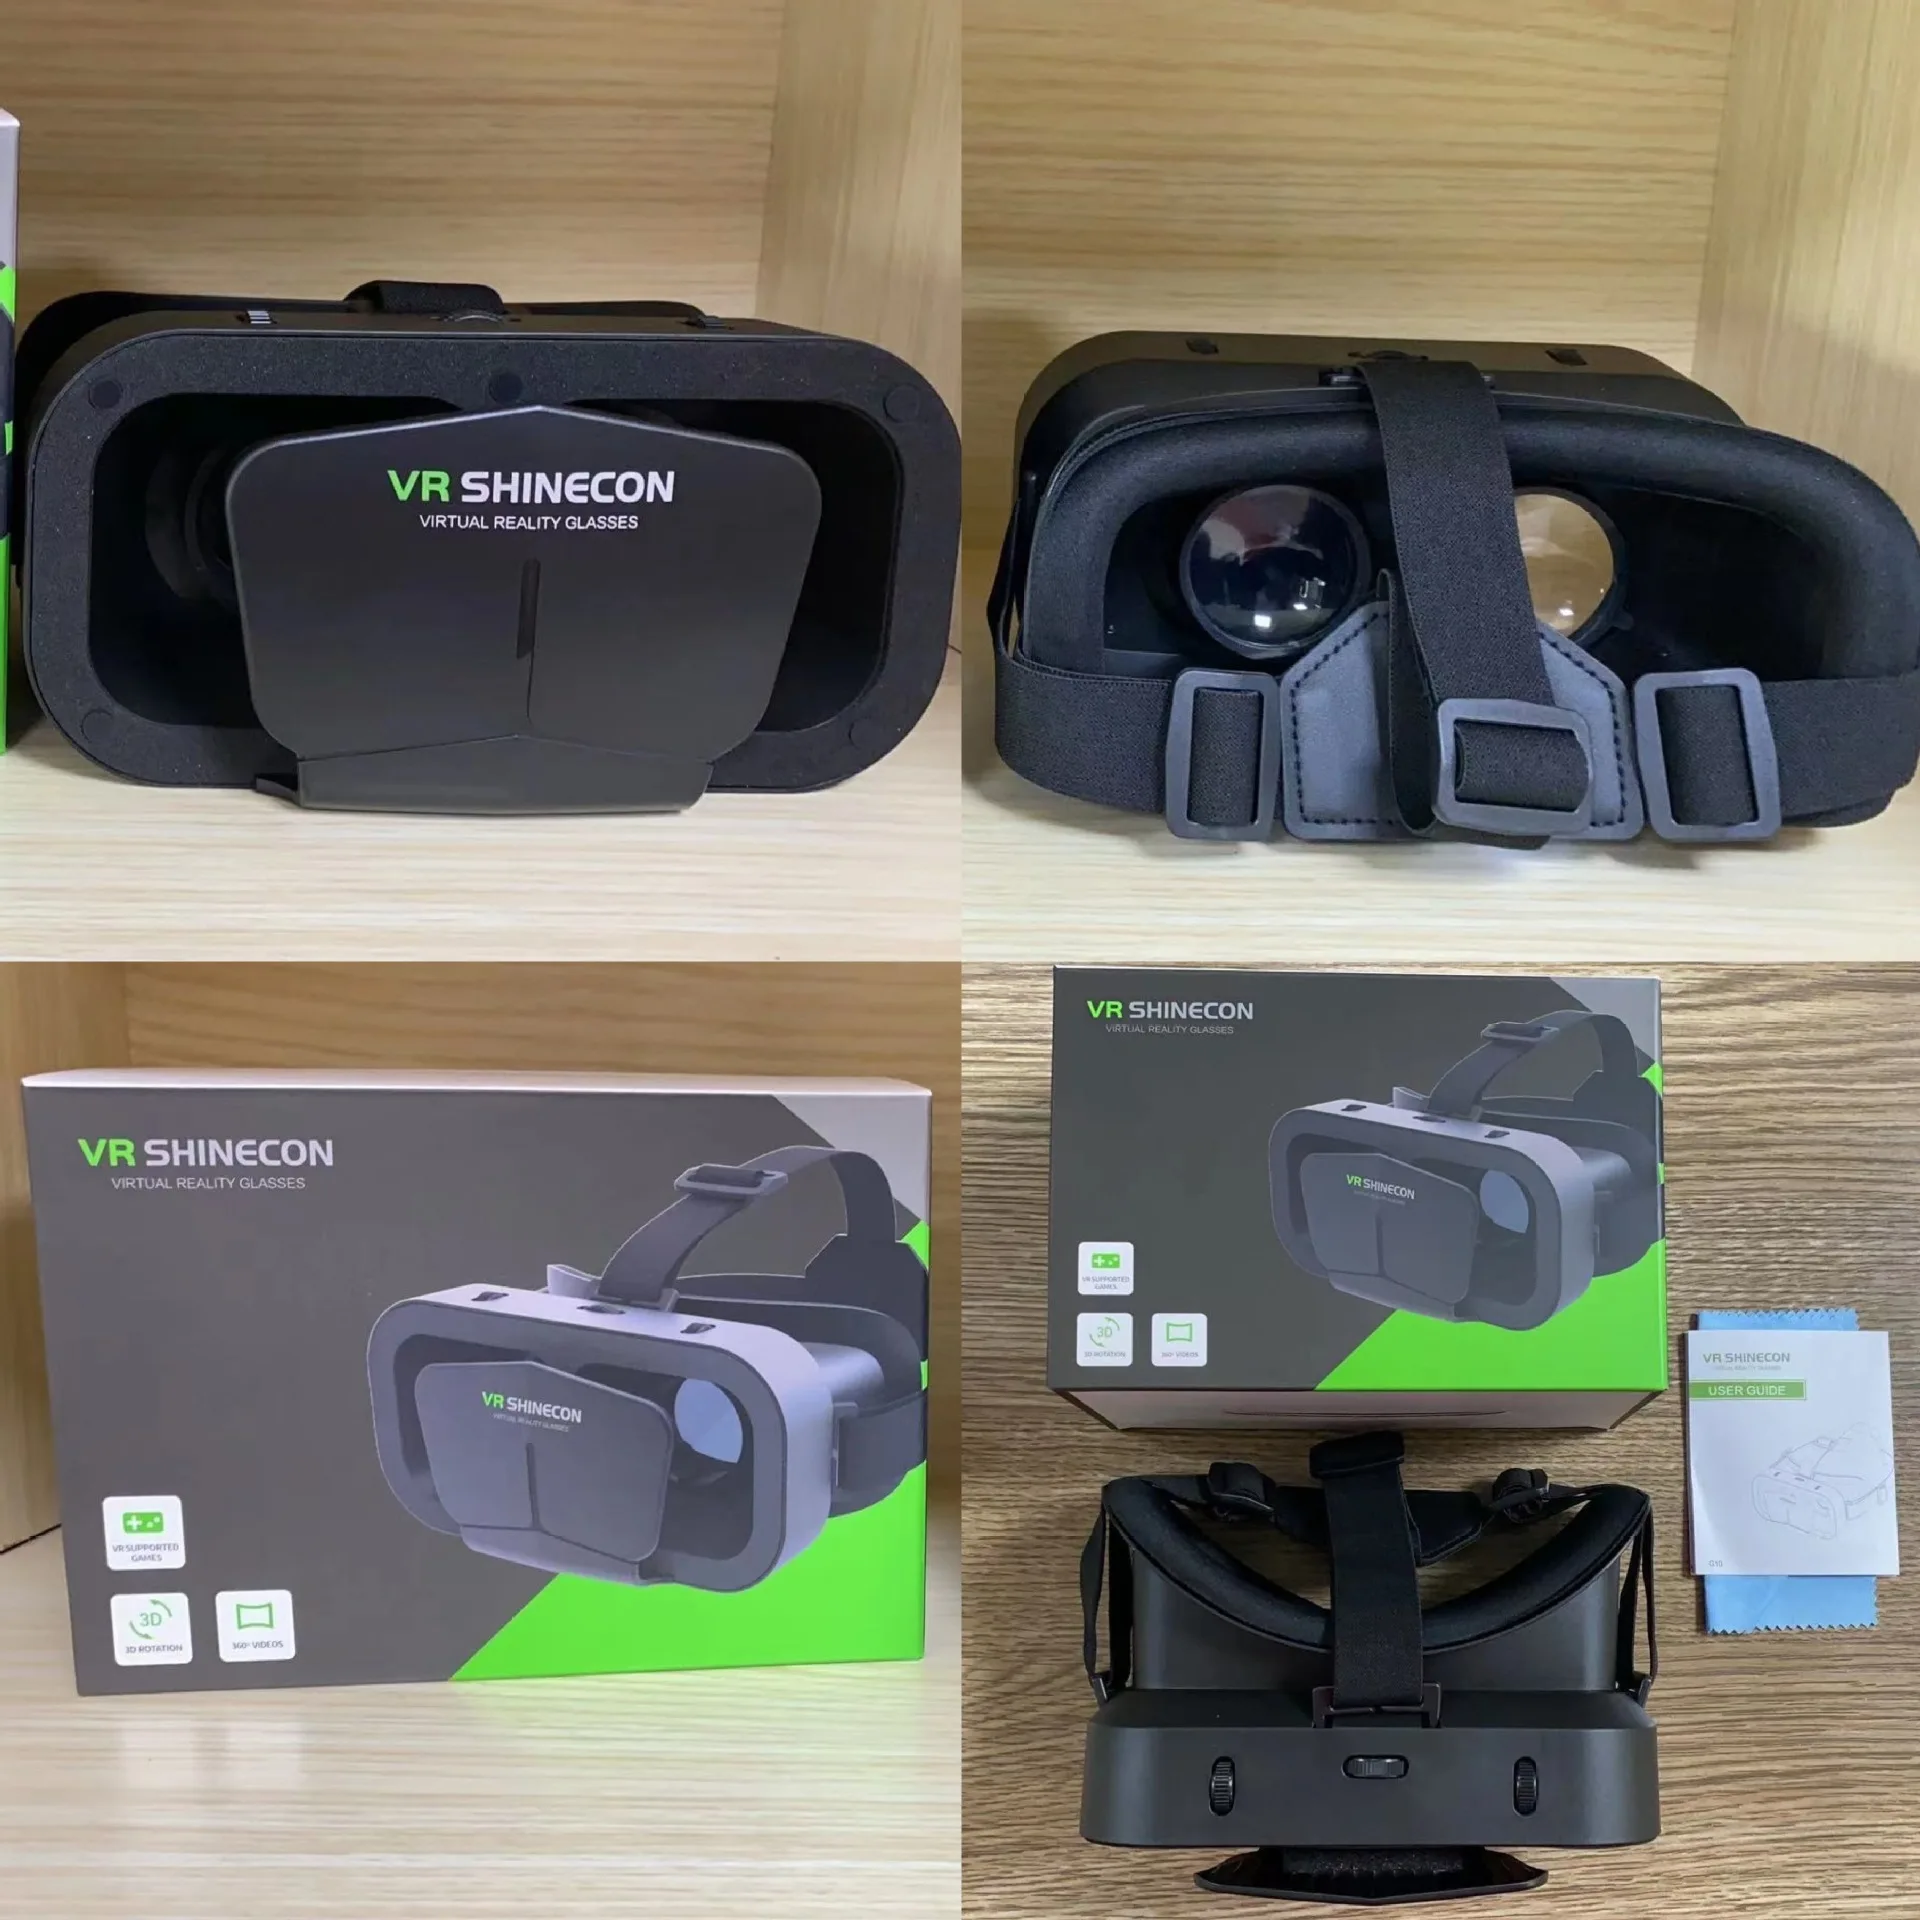 VR SHINECON Virtual Reality 3D VR Headset: Smart Glasses Helmet for Smartphone Immersion